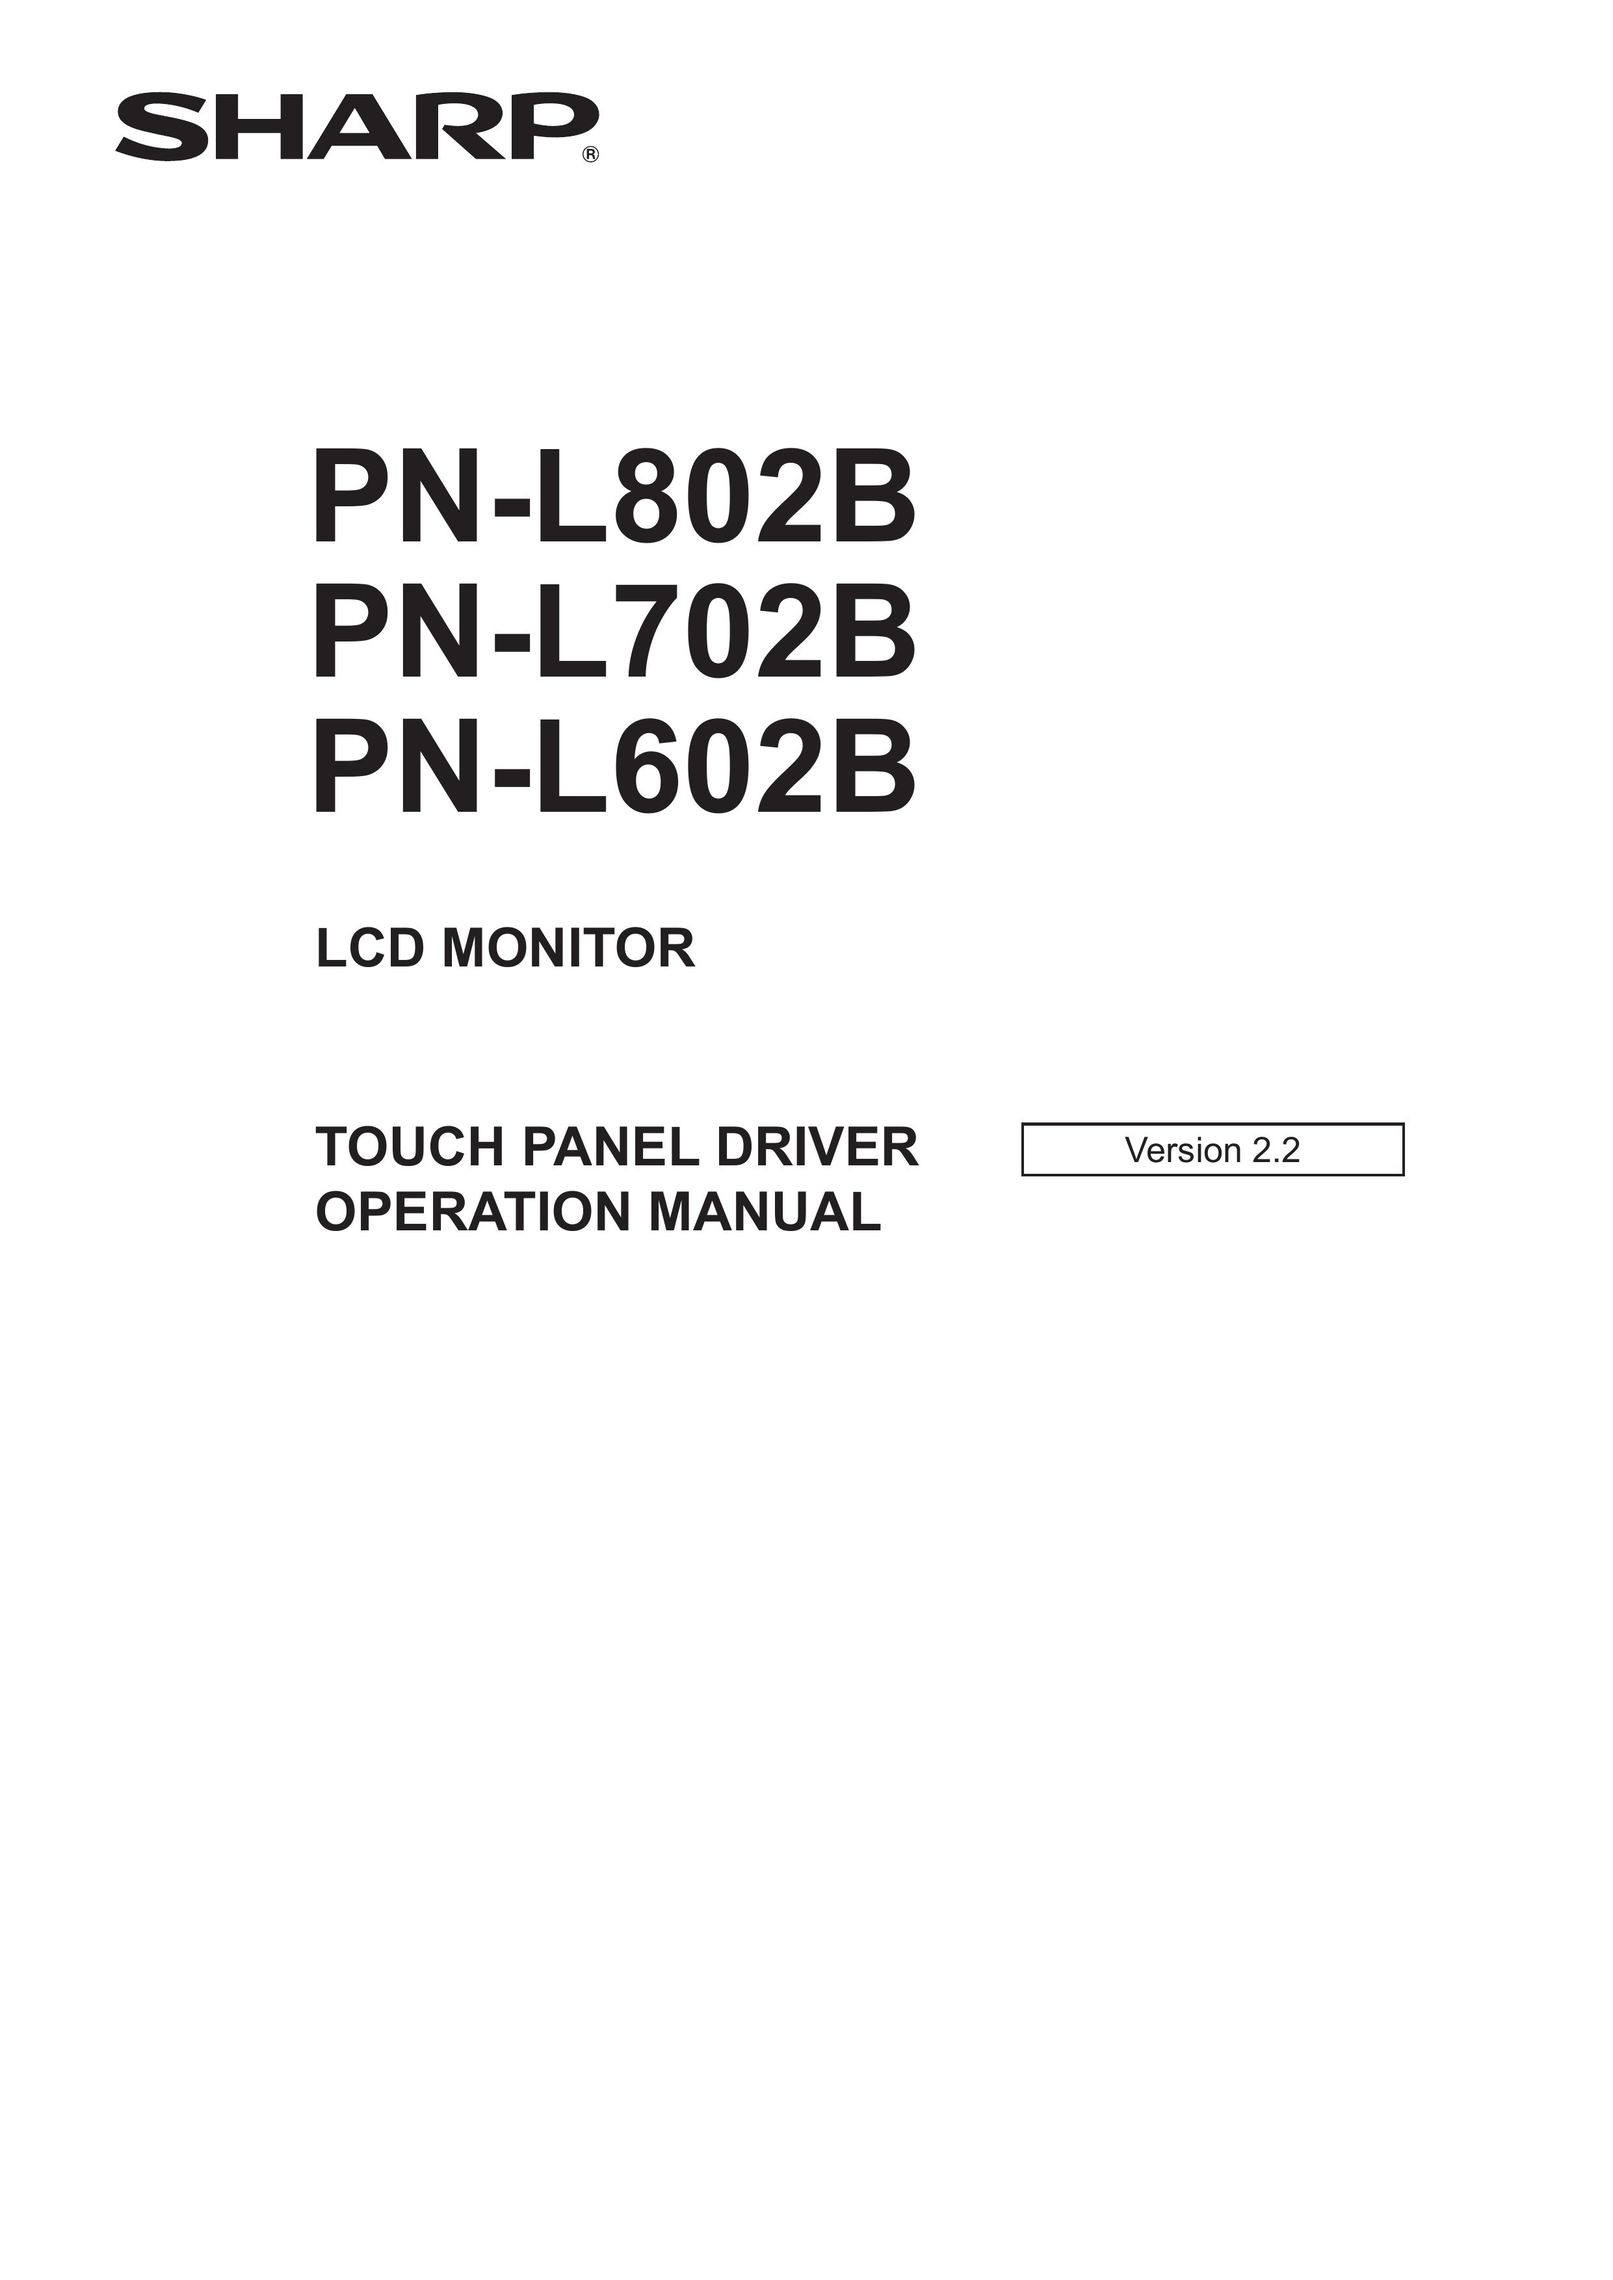 Sharp PN-L702B Computer Monitor User Manual